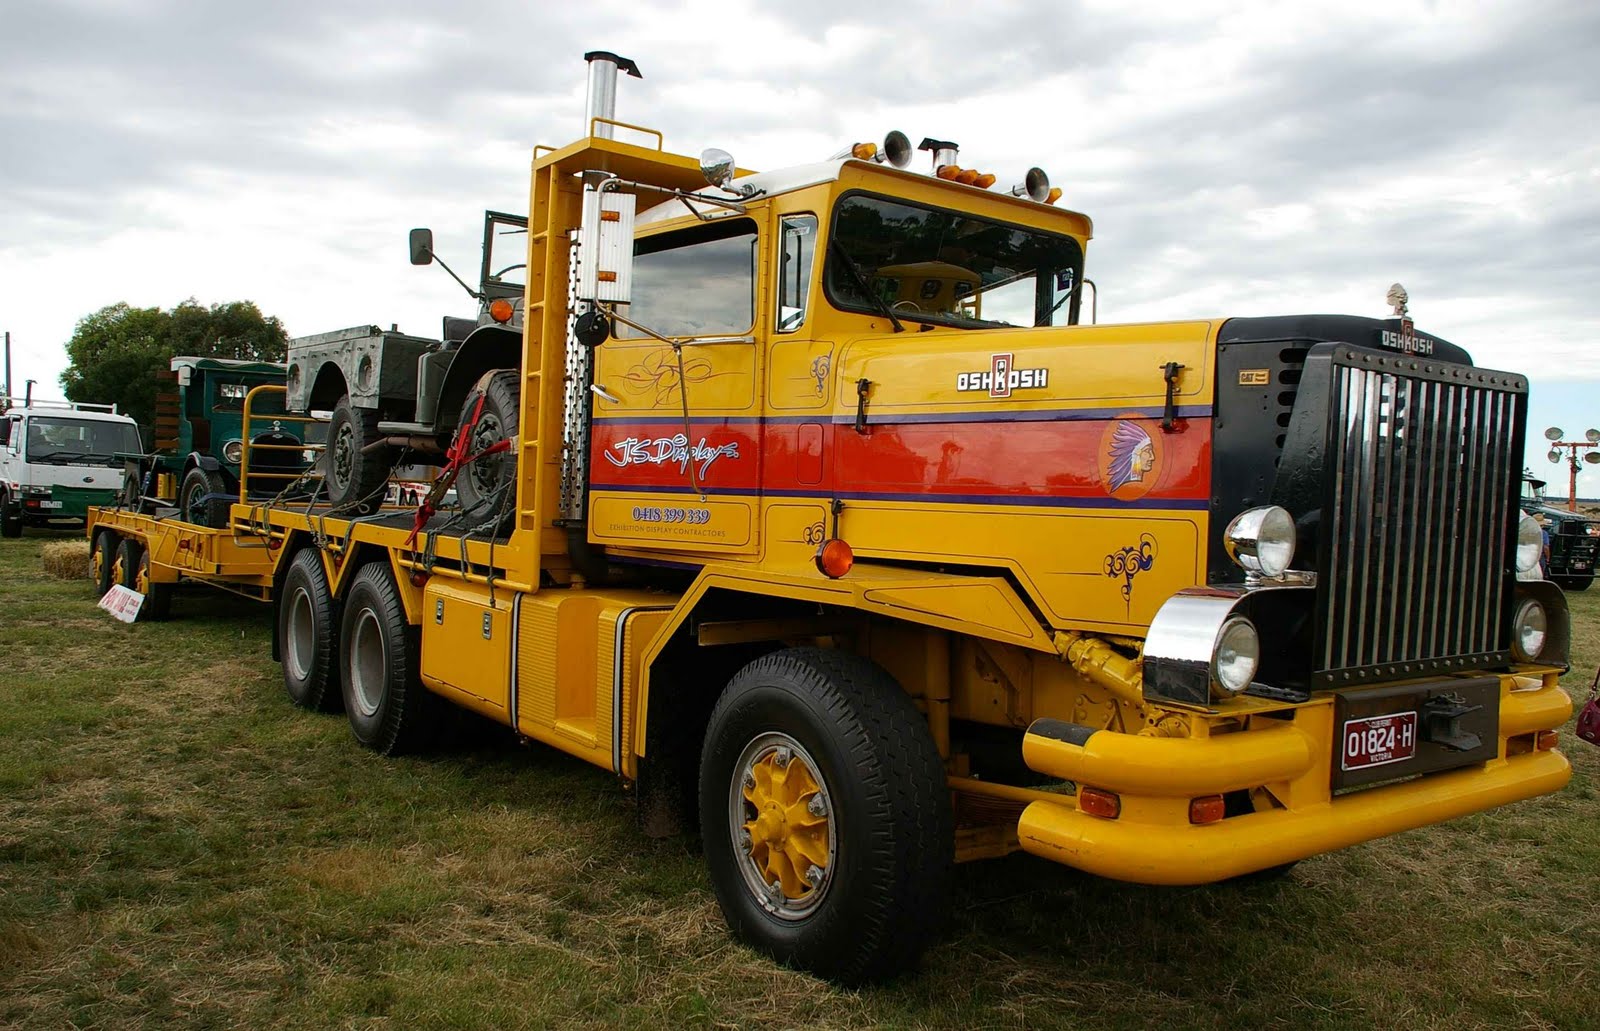 Historic Trucks: HCVC Ballarat Branch Clunes Truck Show 2011 - Part 2